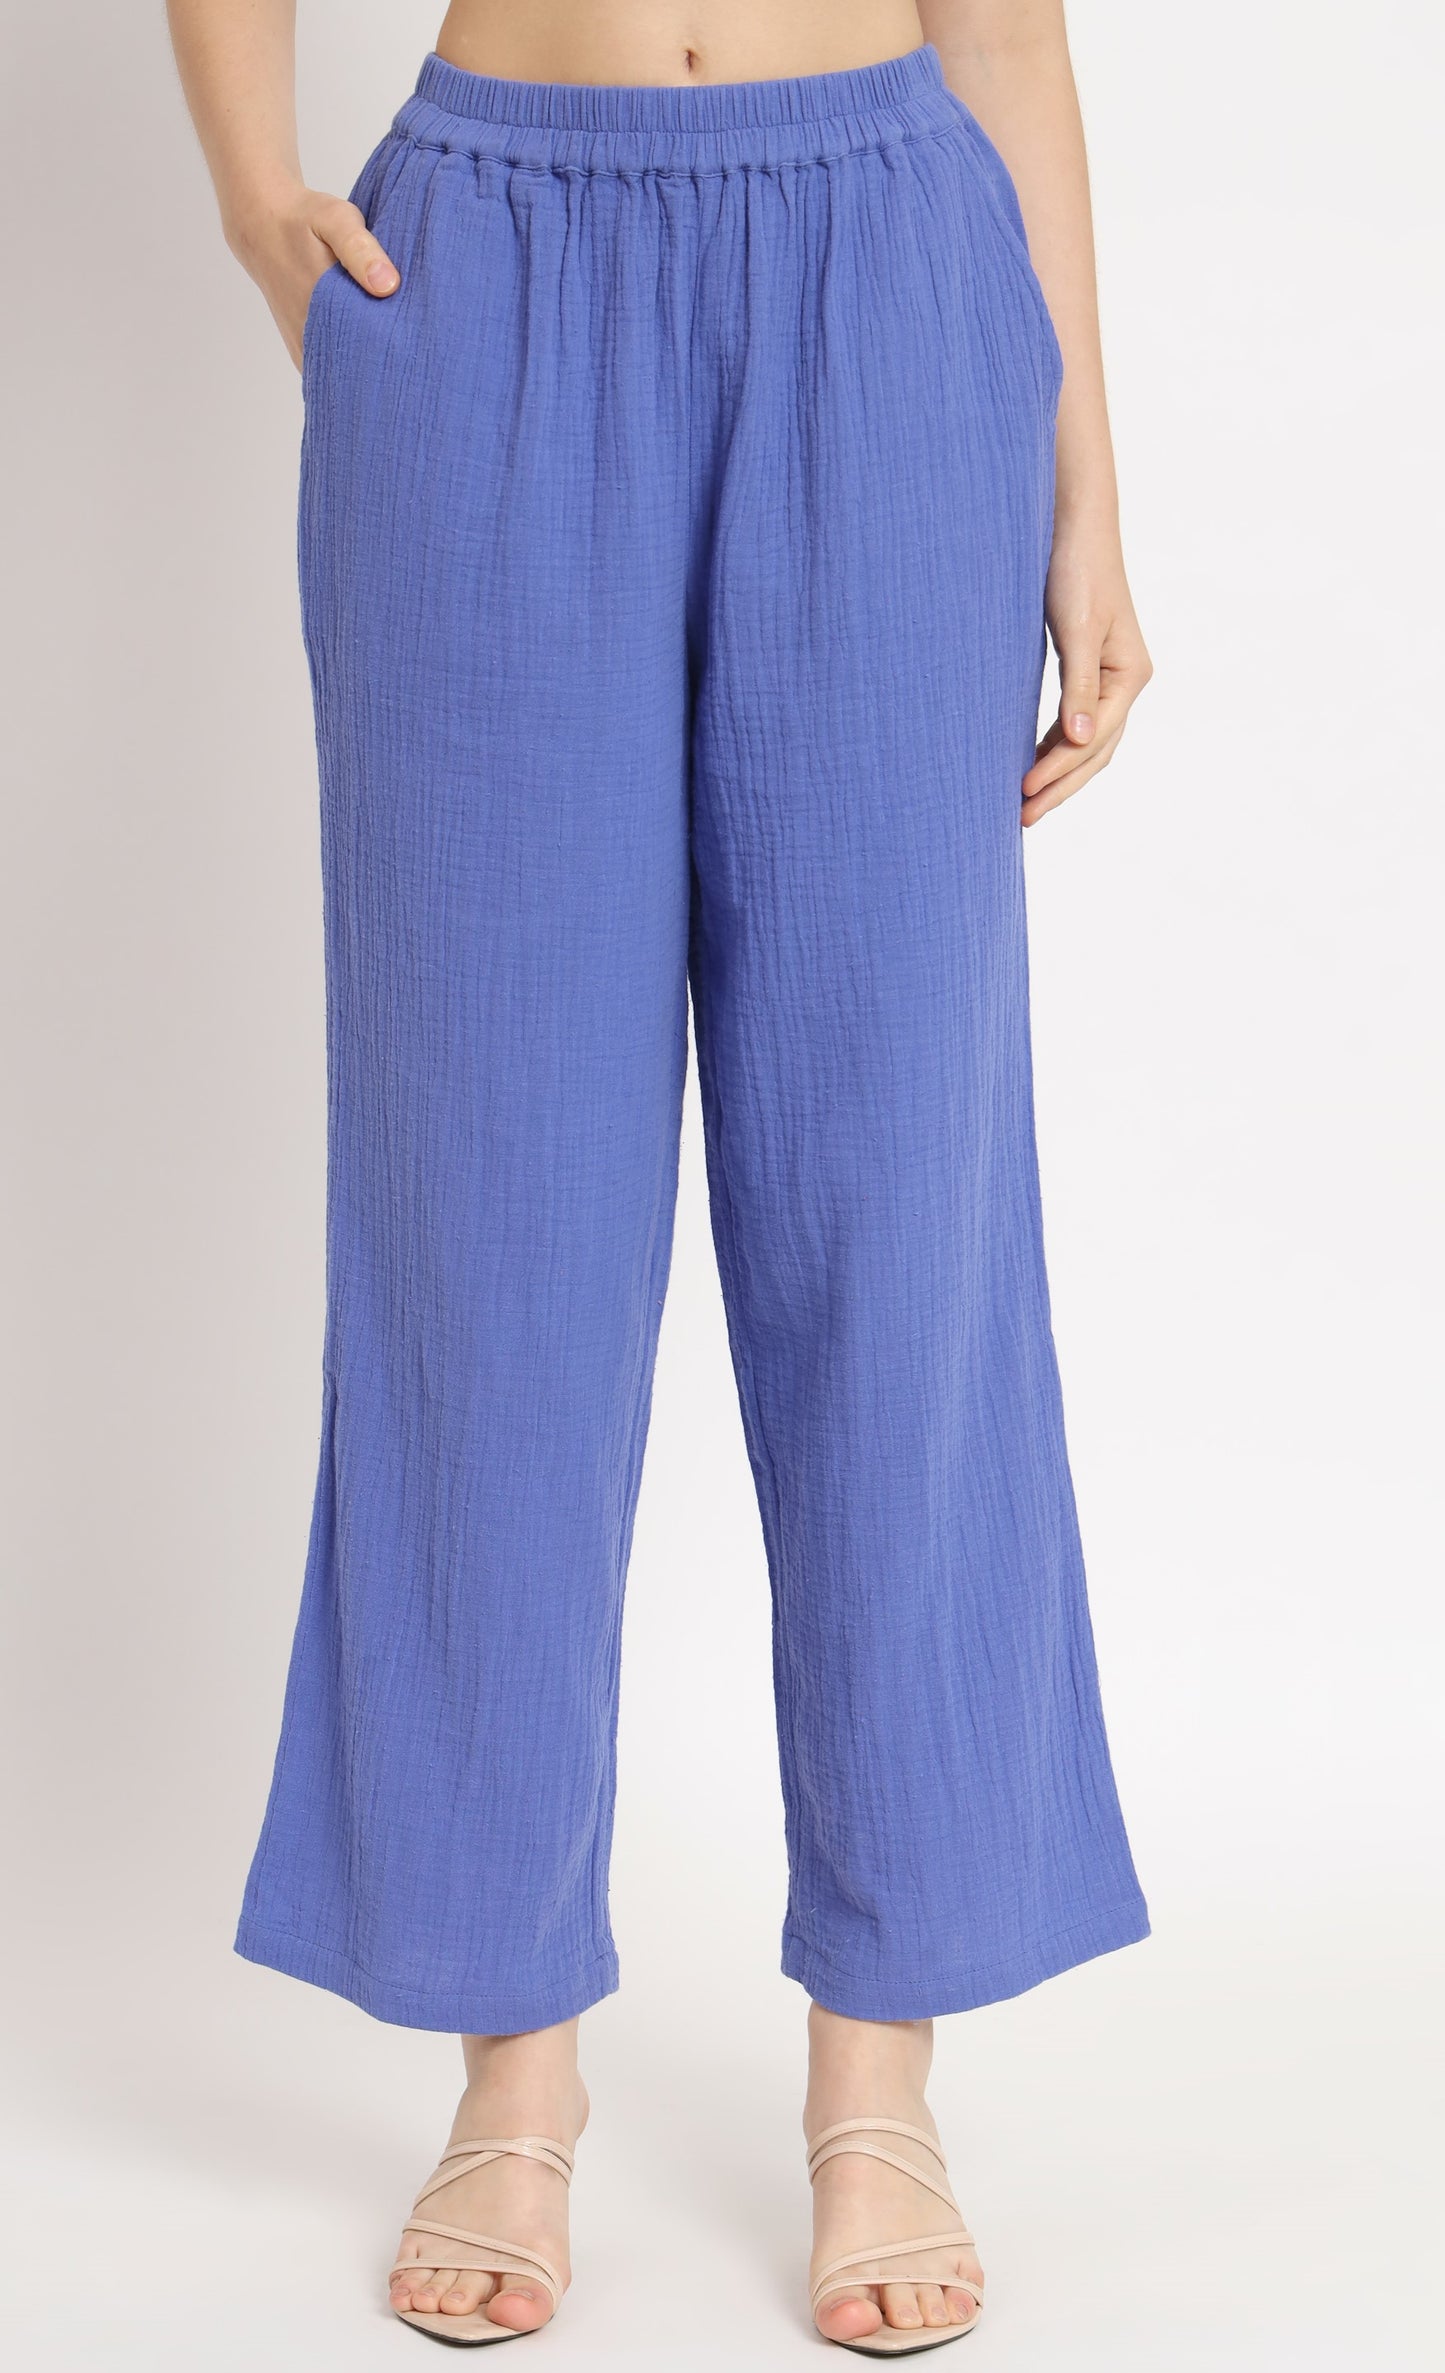 NUEVOSDAMAS Women Pure Cotton Muslin Solid Violet Blue Shirt & Trousers co-ord Set